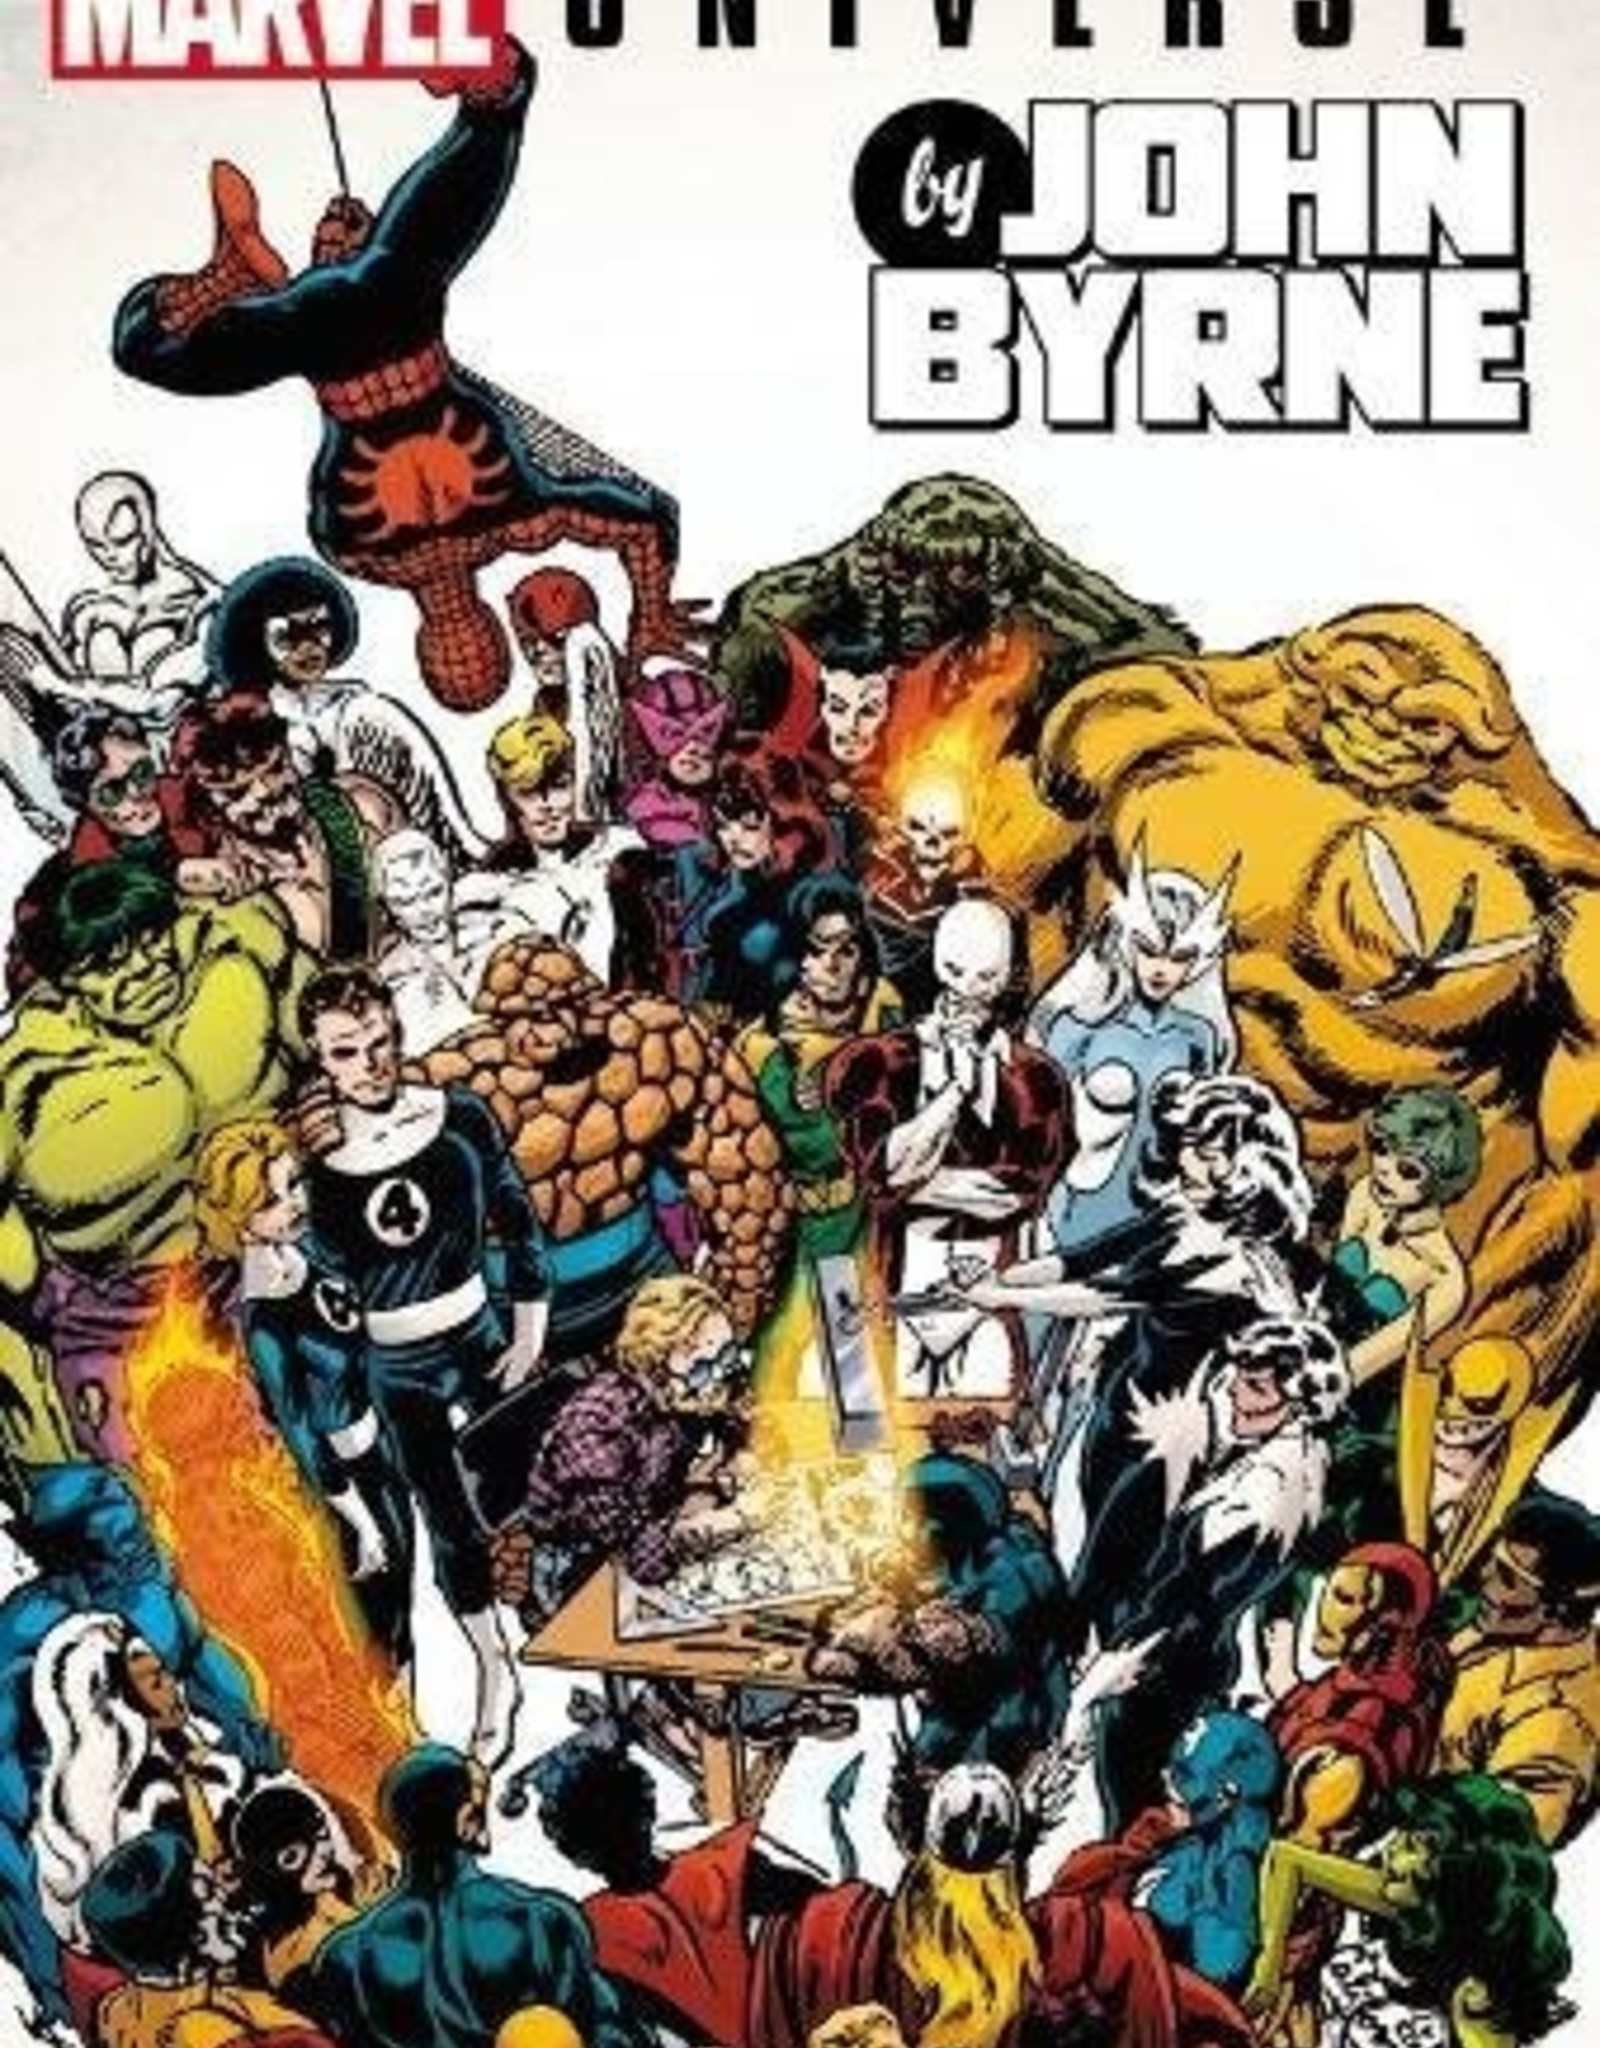 Marvel Comics Marvel Universe by John Byrne Omnibus Volume 1